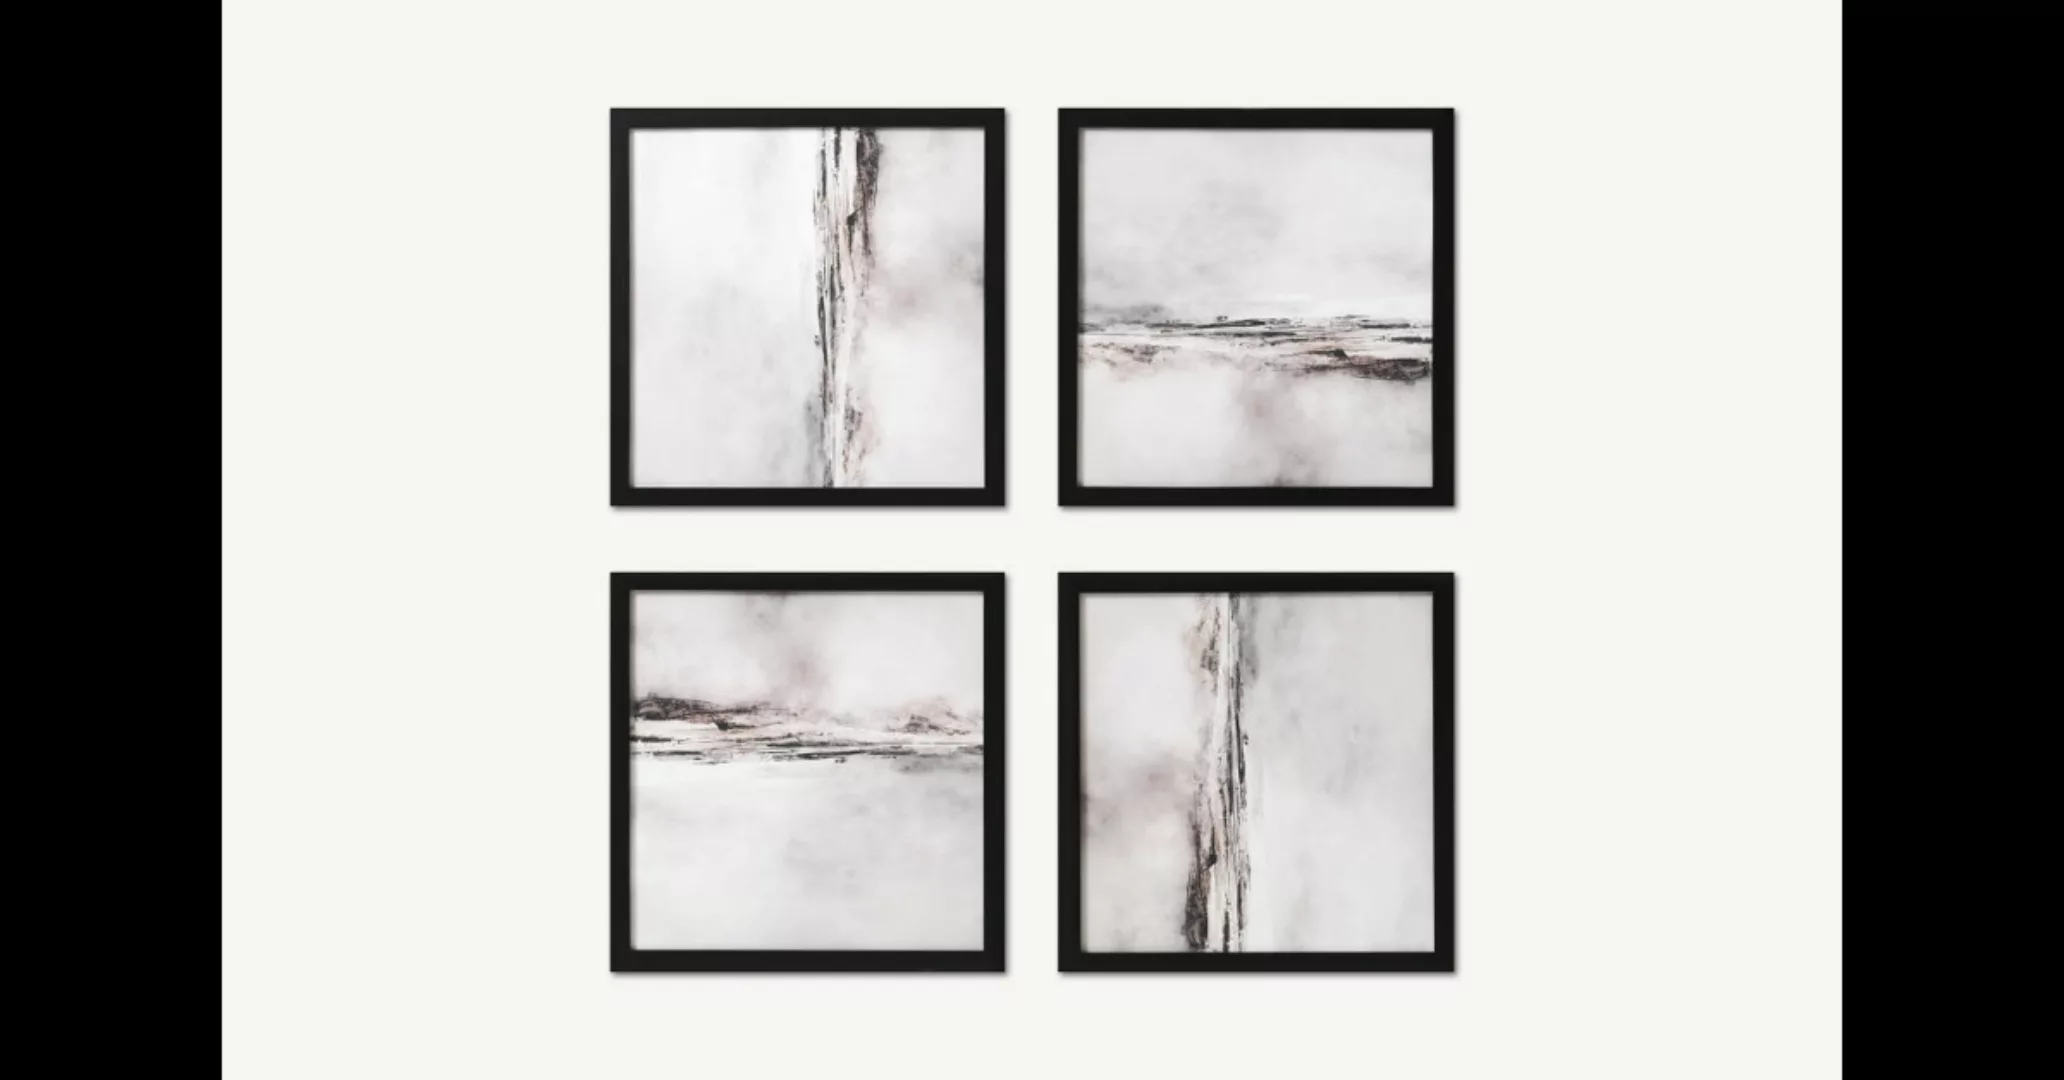 4 x Dan Hobday 'Soft Abstract' gerahmte Kunstdrucke (40 x 40 cm) - MADE.com günstig online kaufen